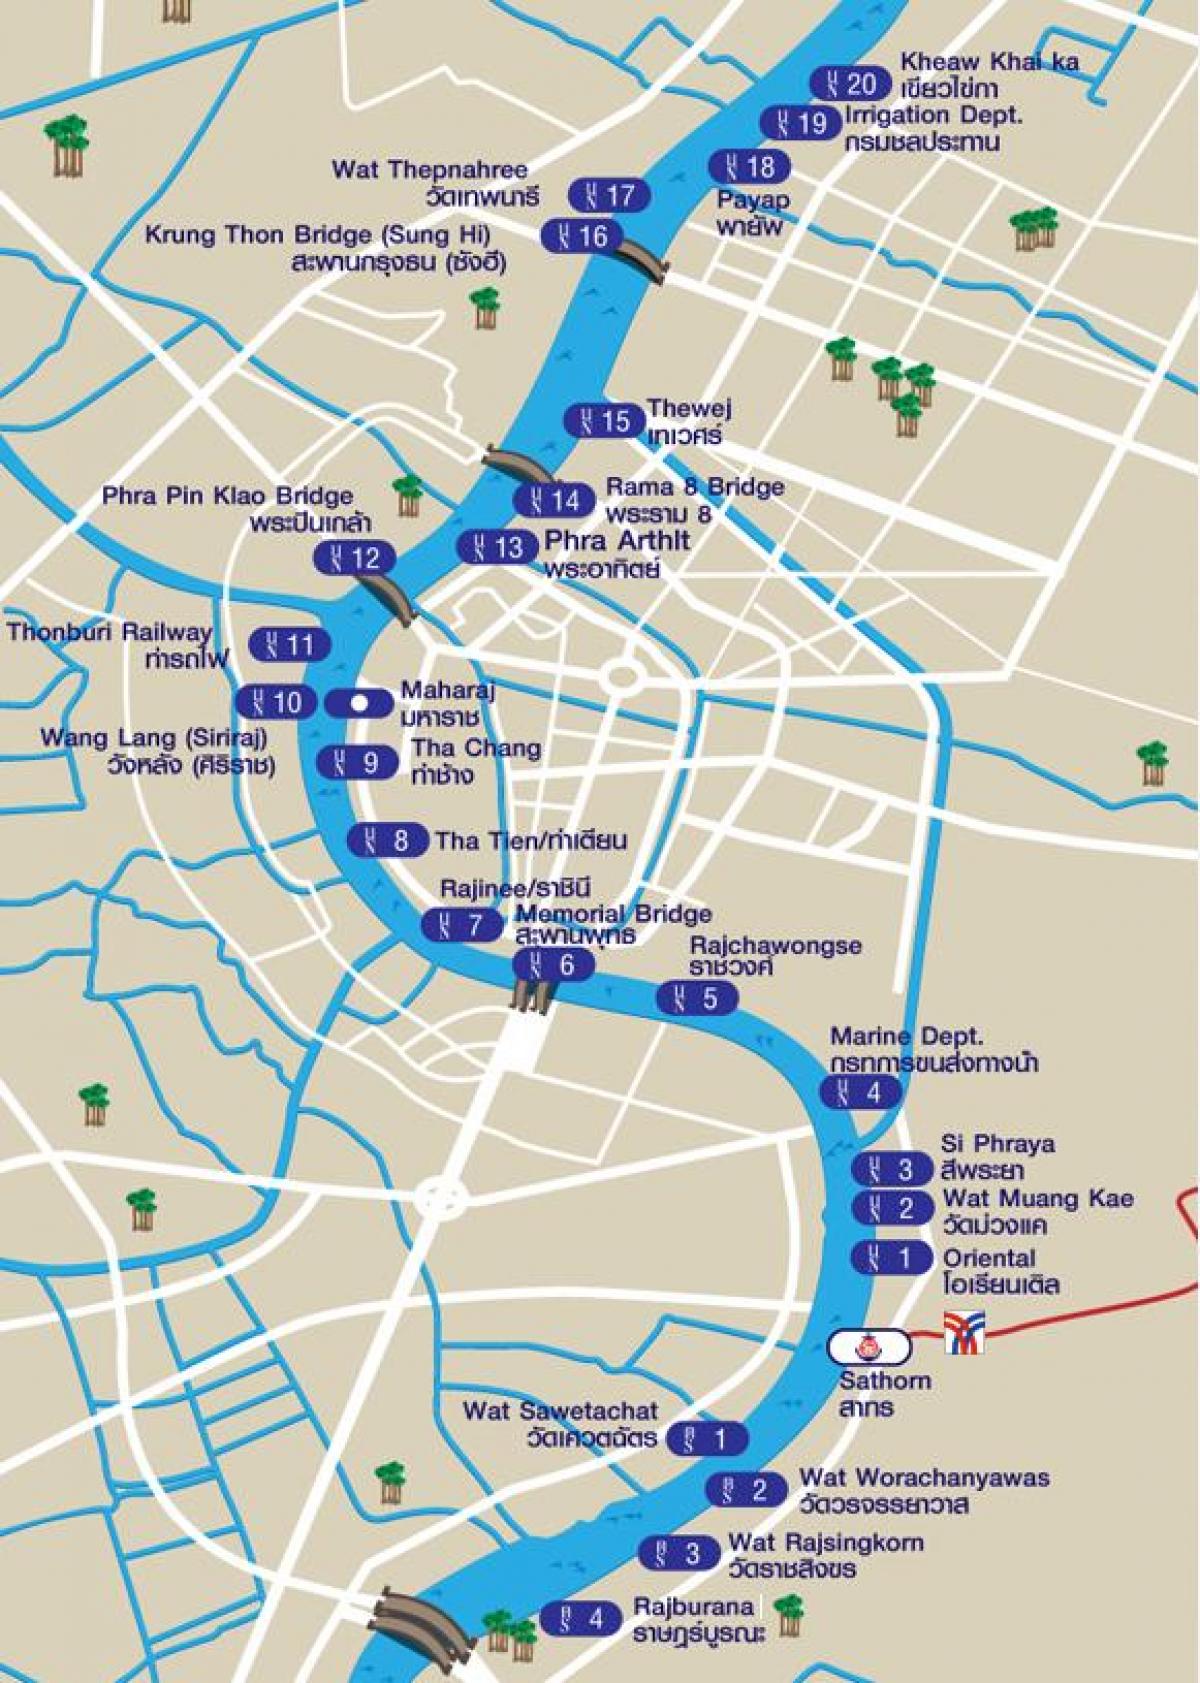 реката такси мапата бангкок